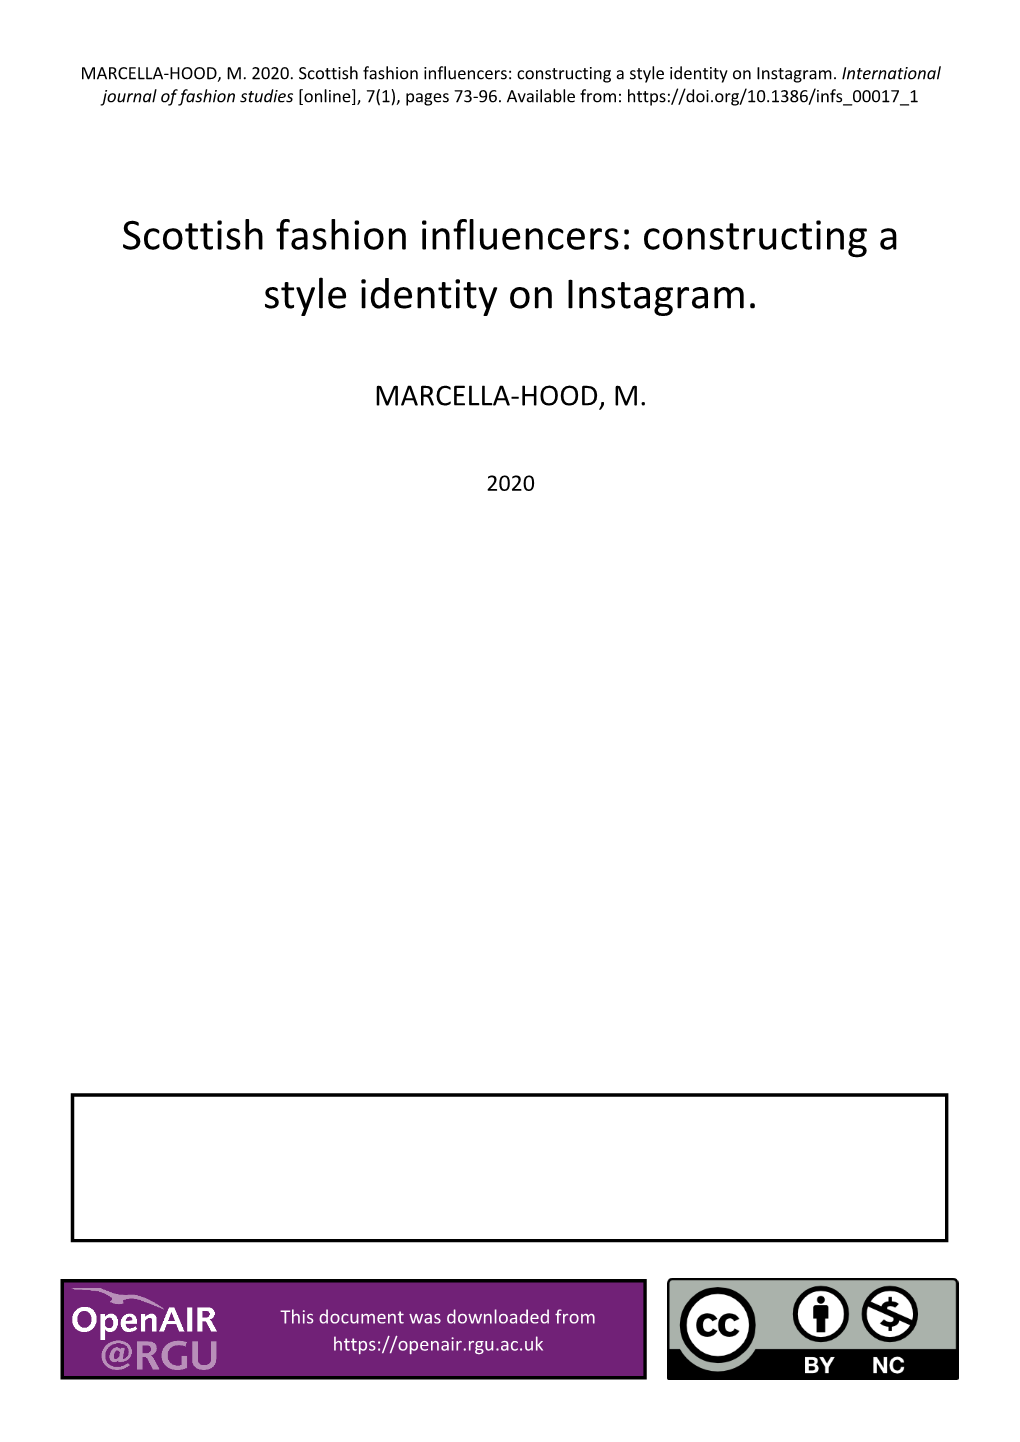 Scottish Fashion Influencers: Constructing a Style Identity on Instagram